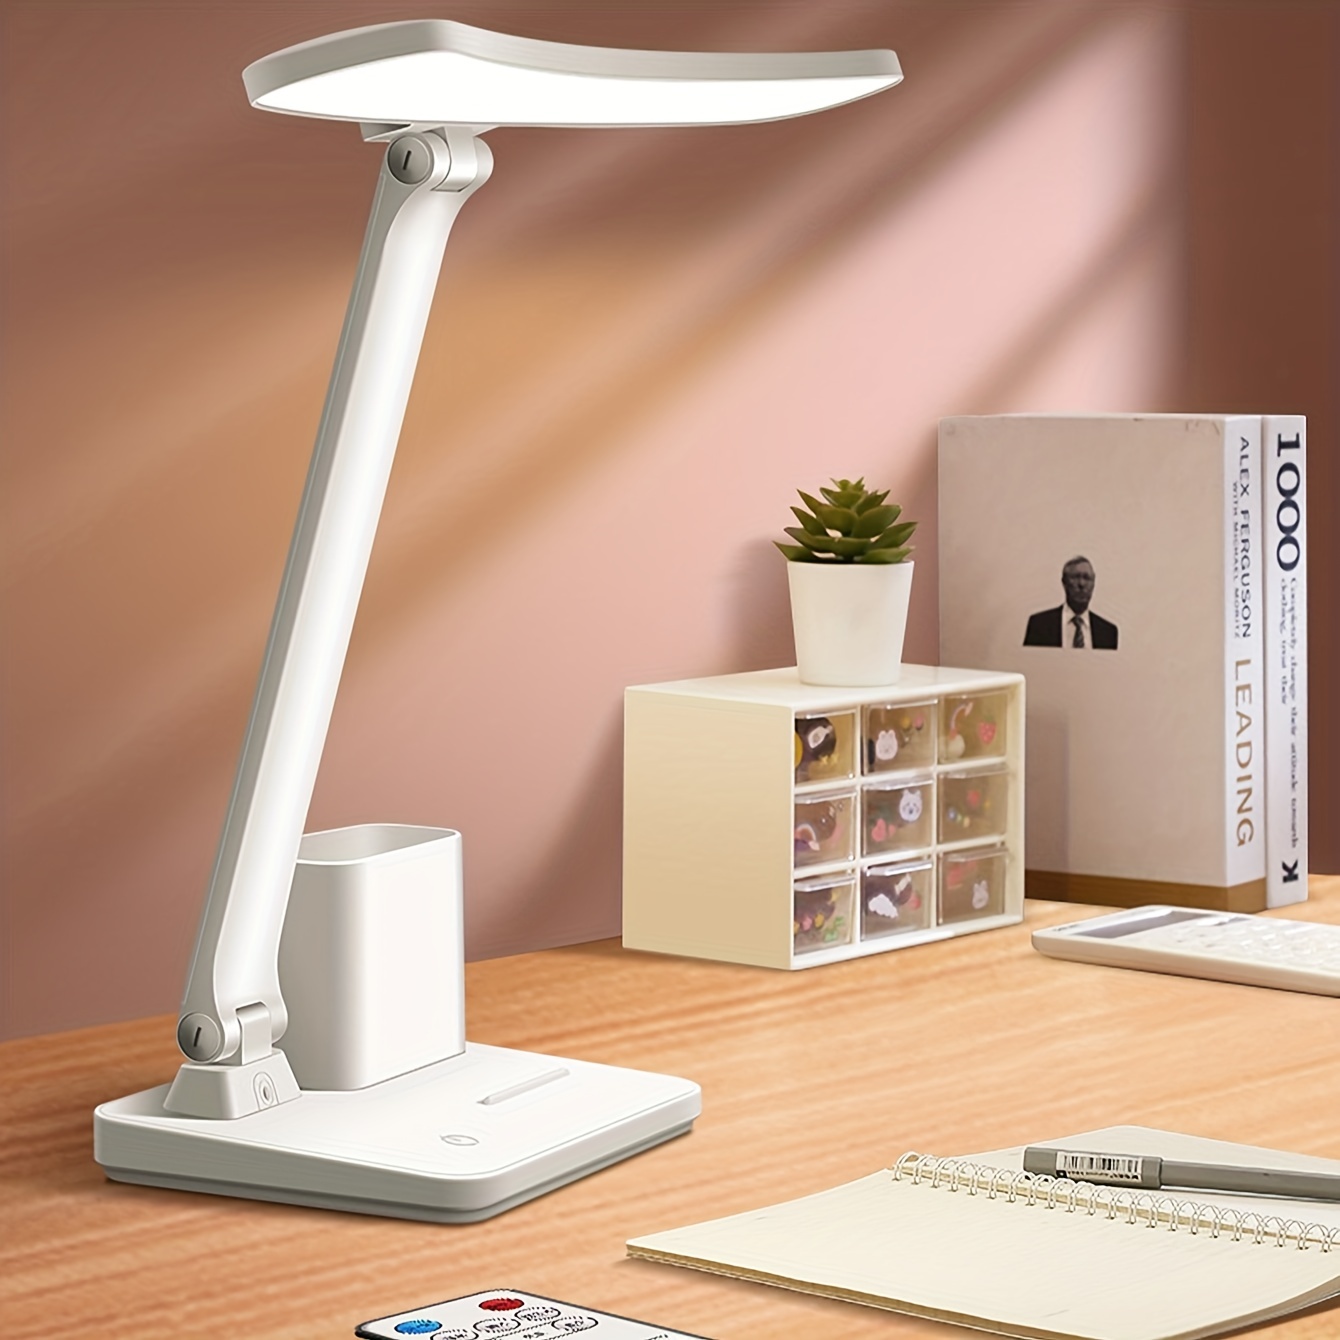 E-COSMOS Portable Flexible USB LED Light Lamp, Multicolour, Small